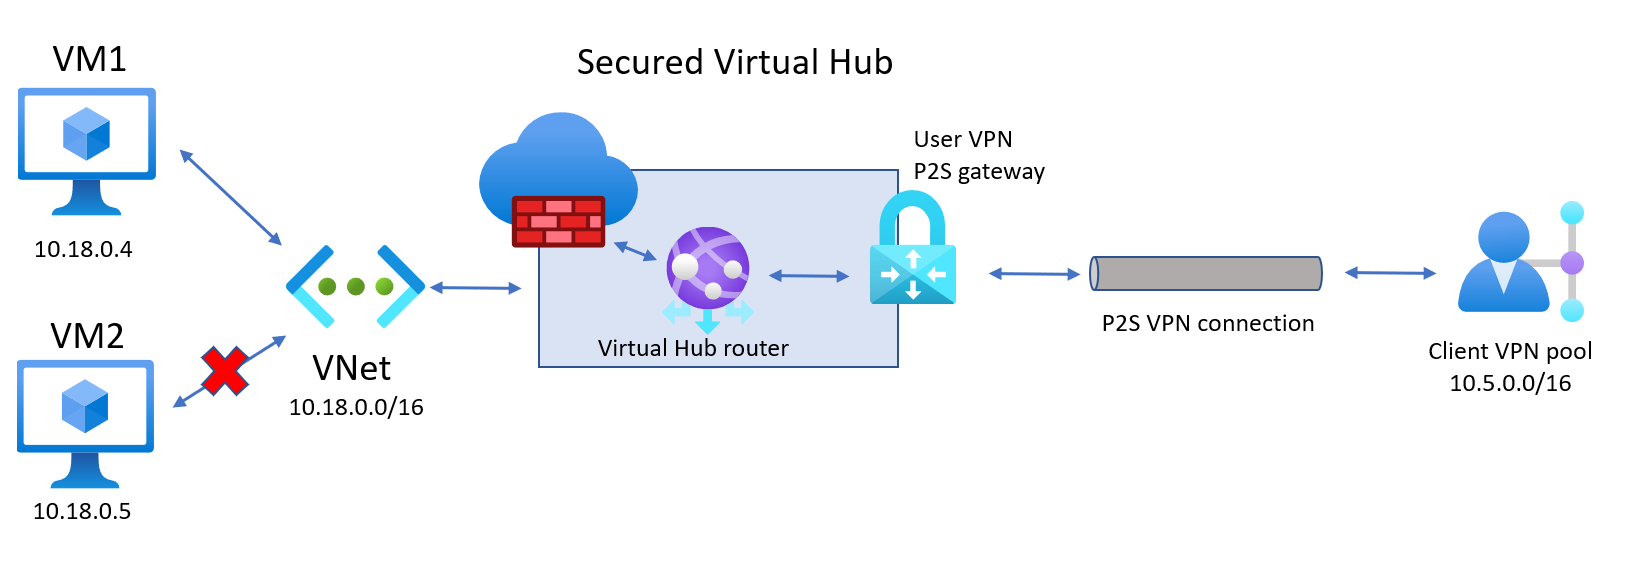 Diagrama de um Hub virtual seguro.